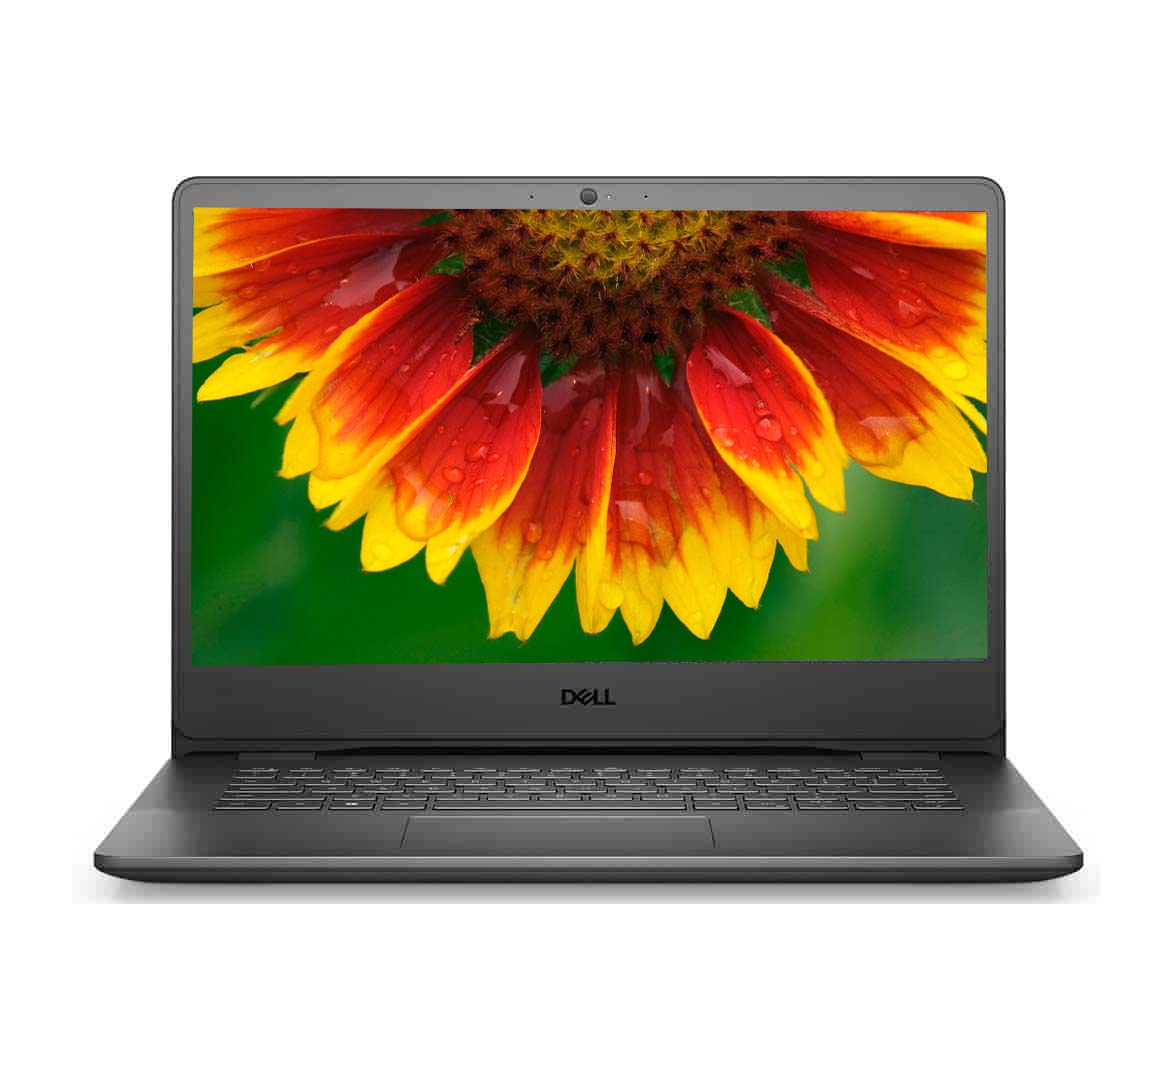 Dell Latitude 3400 Business Laptop, Intel Core i5-8th Generation CPU, 8GB RAM, 512GB SSD , 14 inch Touchscreen, Windows 10 Pro, Refurbished Laptop